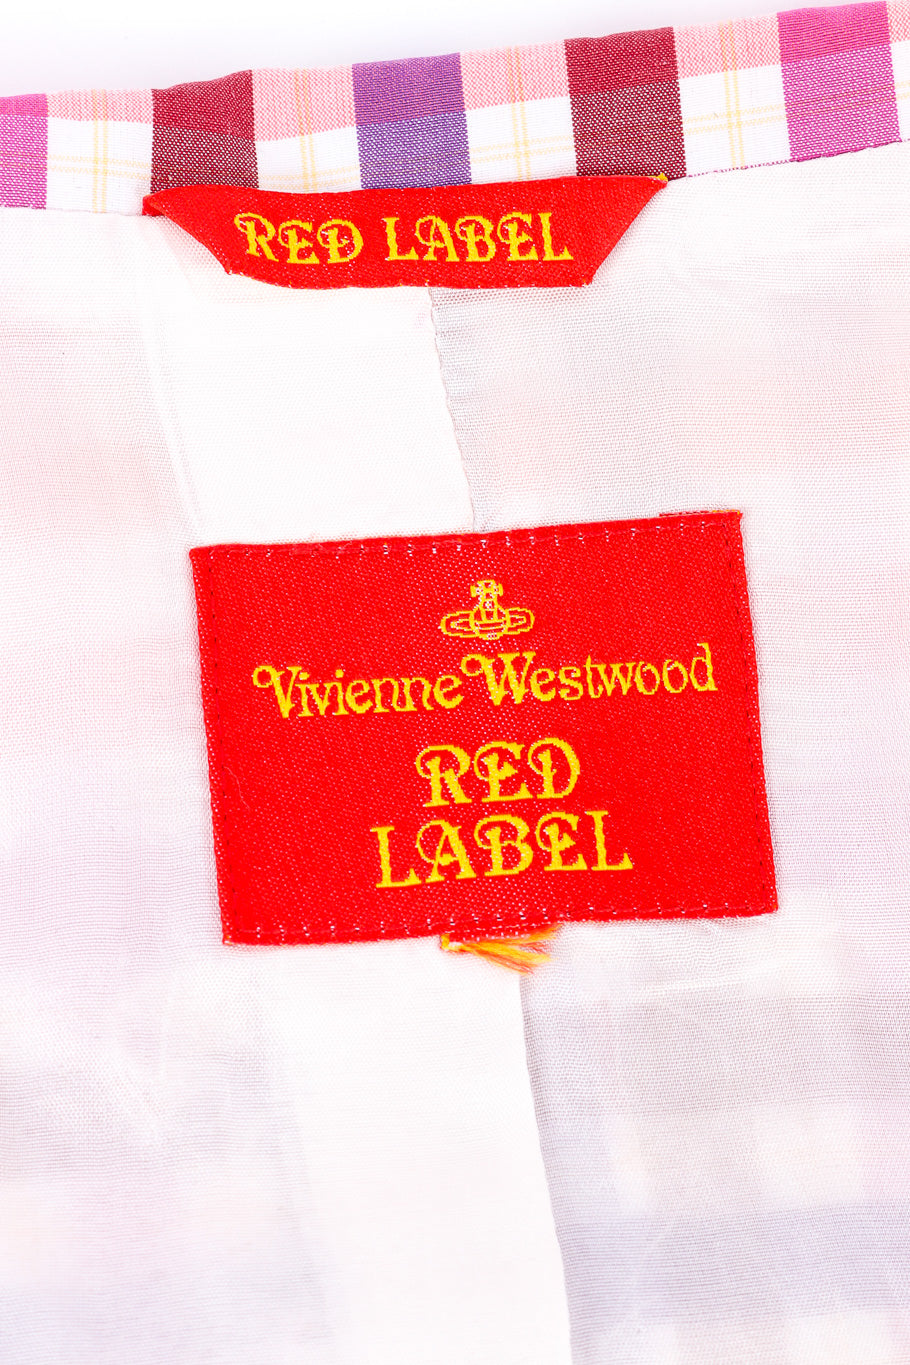 Pastel gingham jacket by Vivienne Westwood flat lay label @recessla